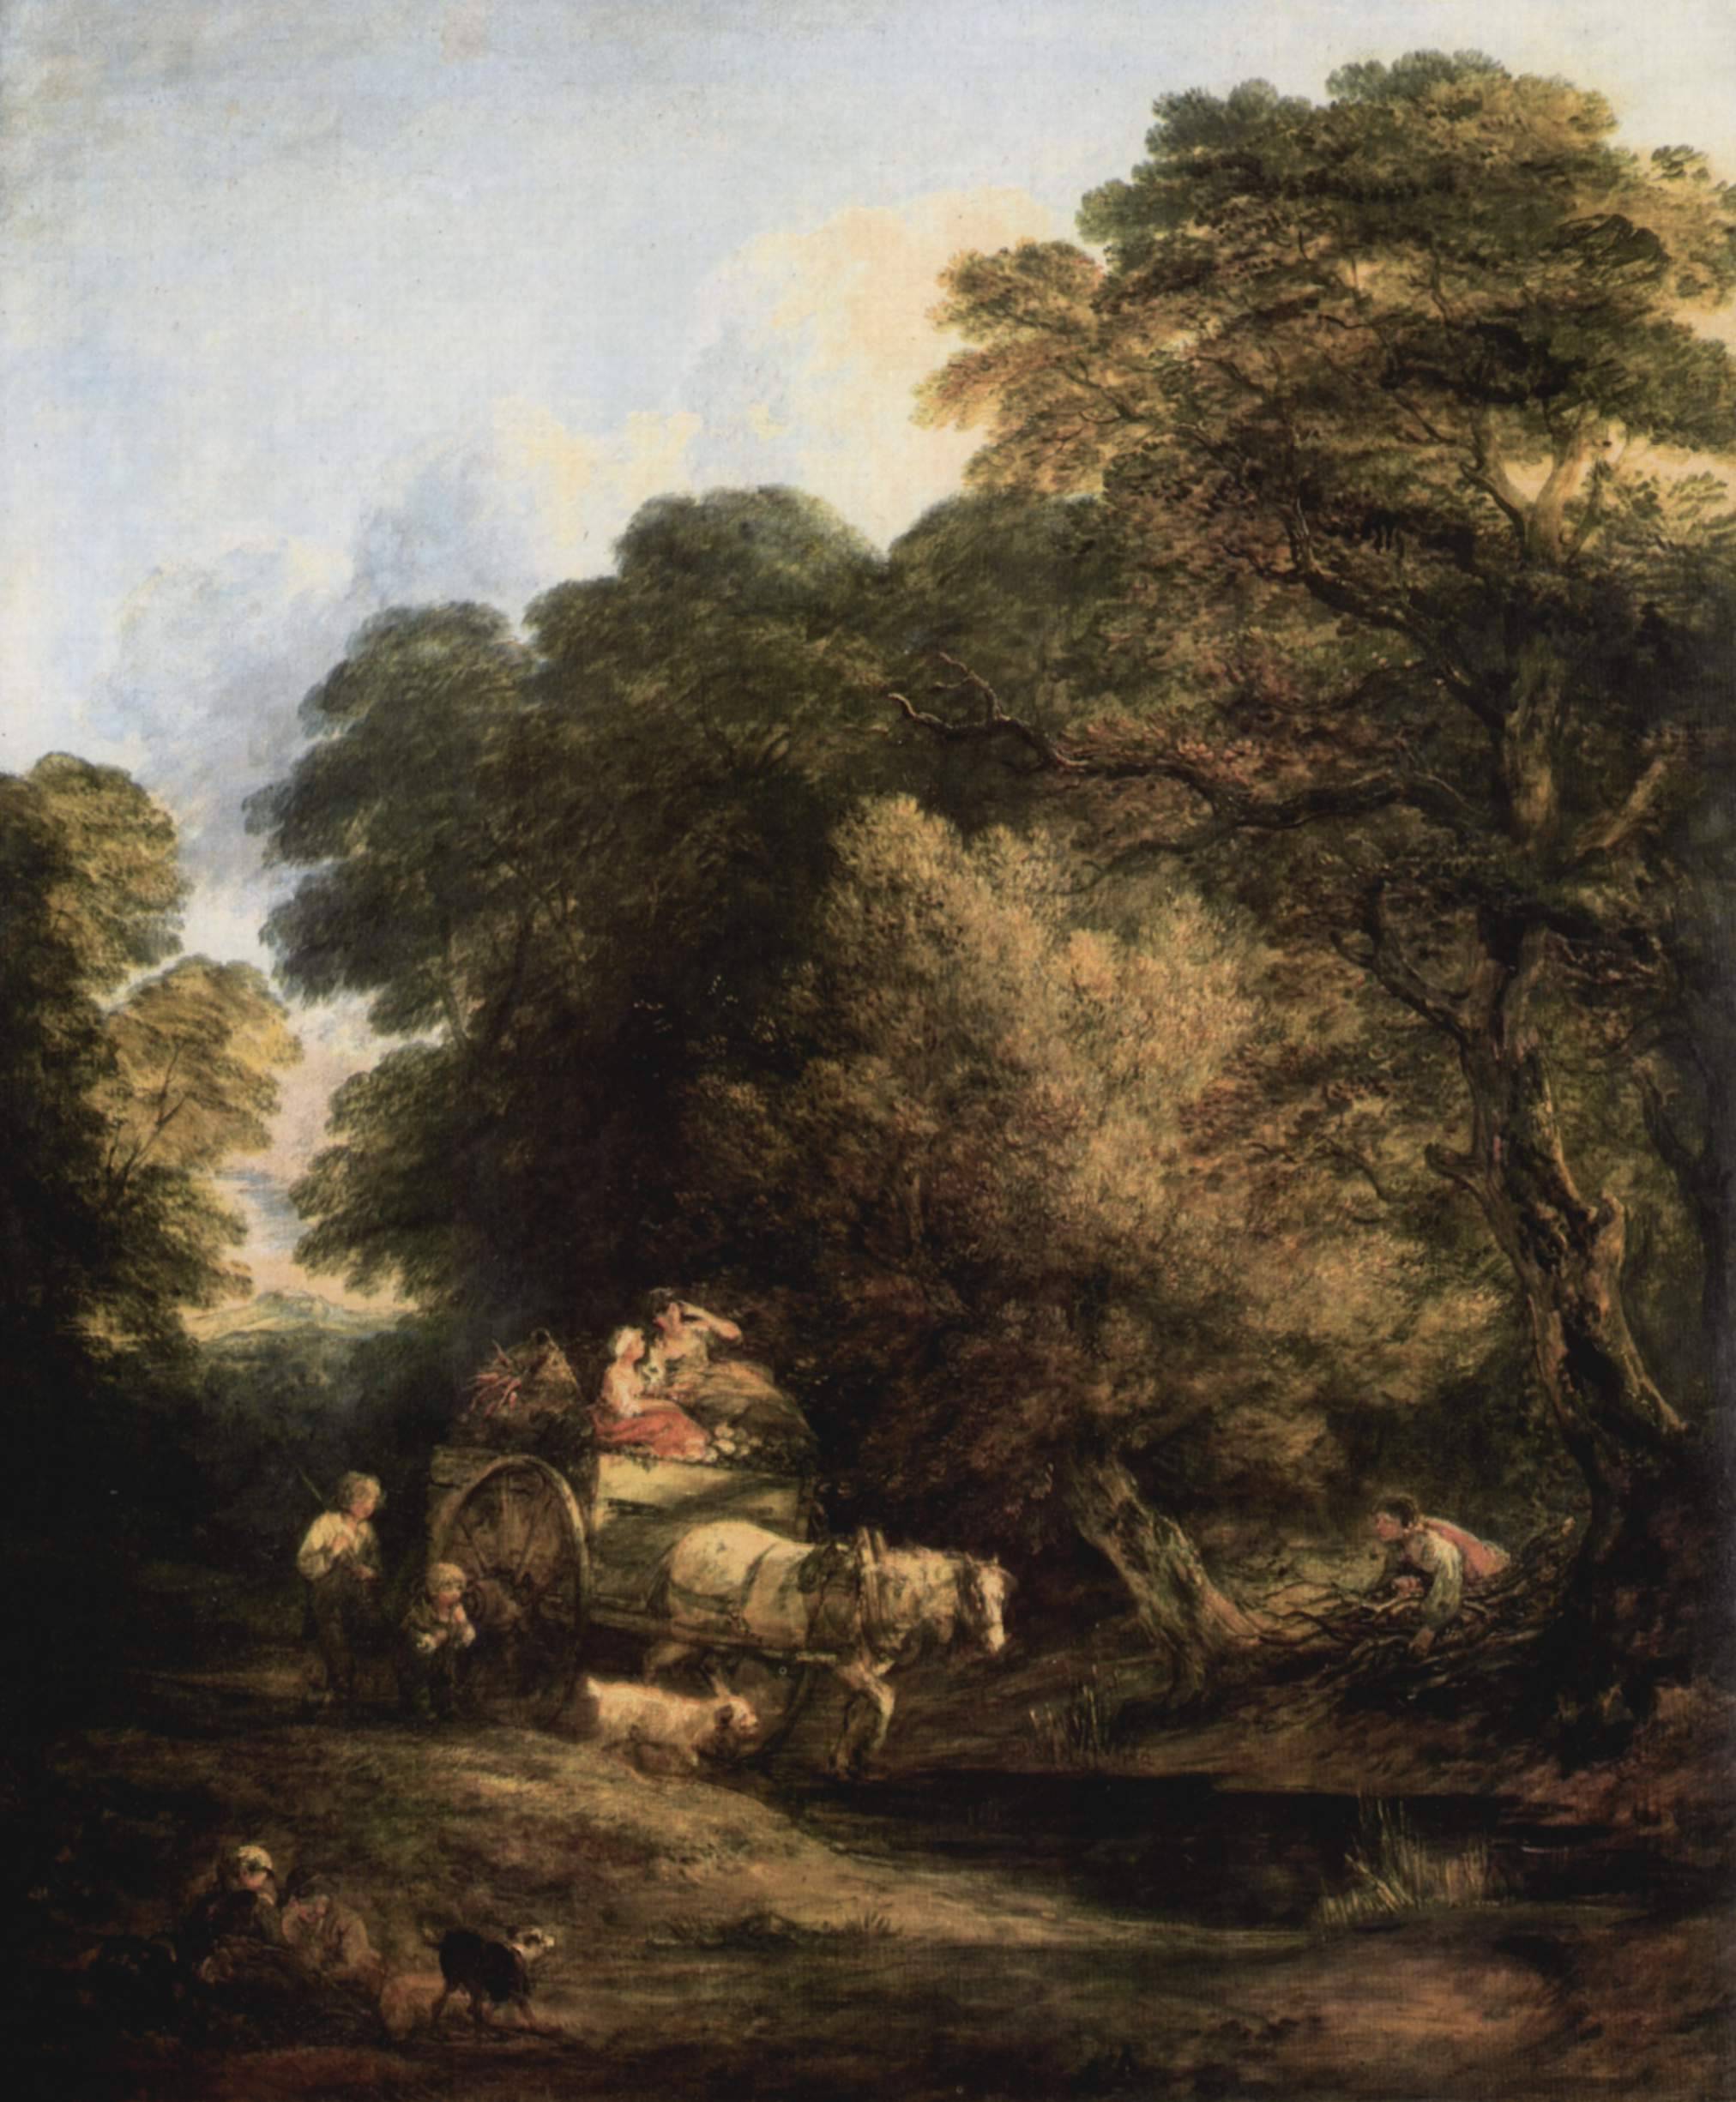 Thomas Gainsborough (1786-1787)